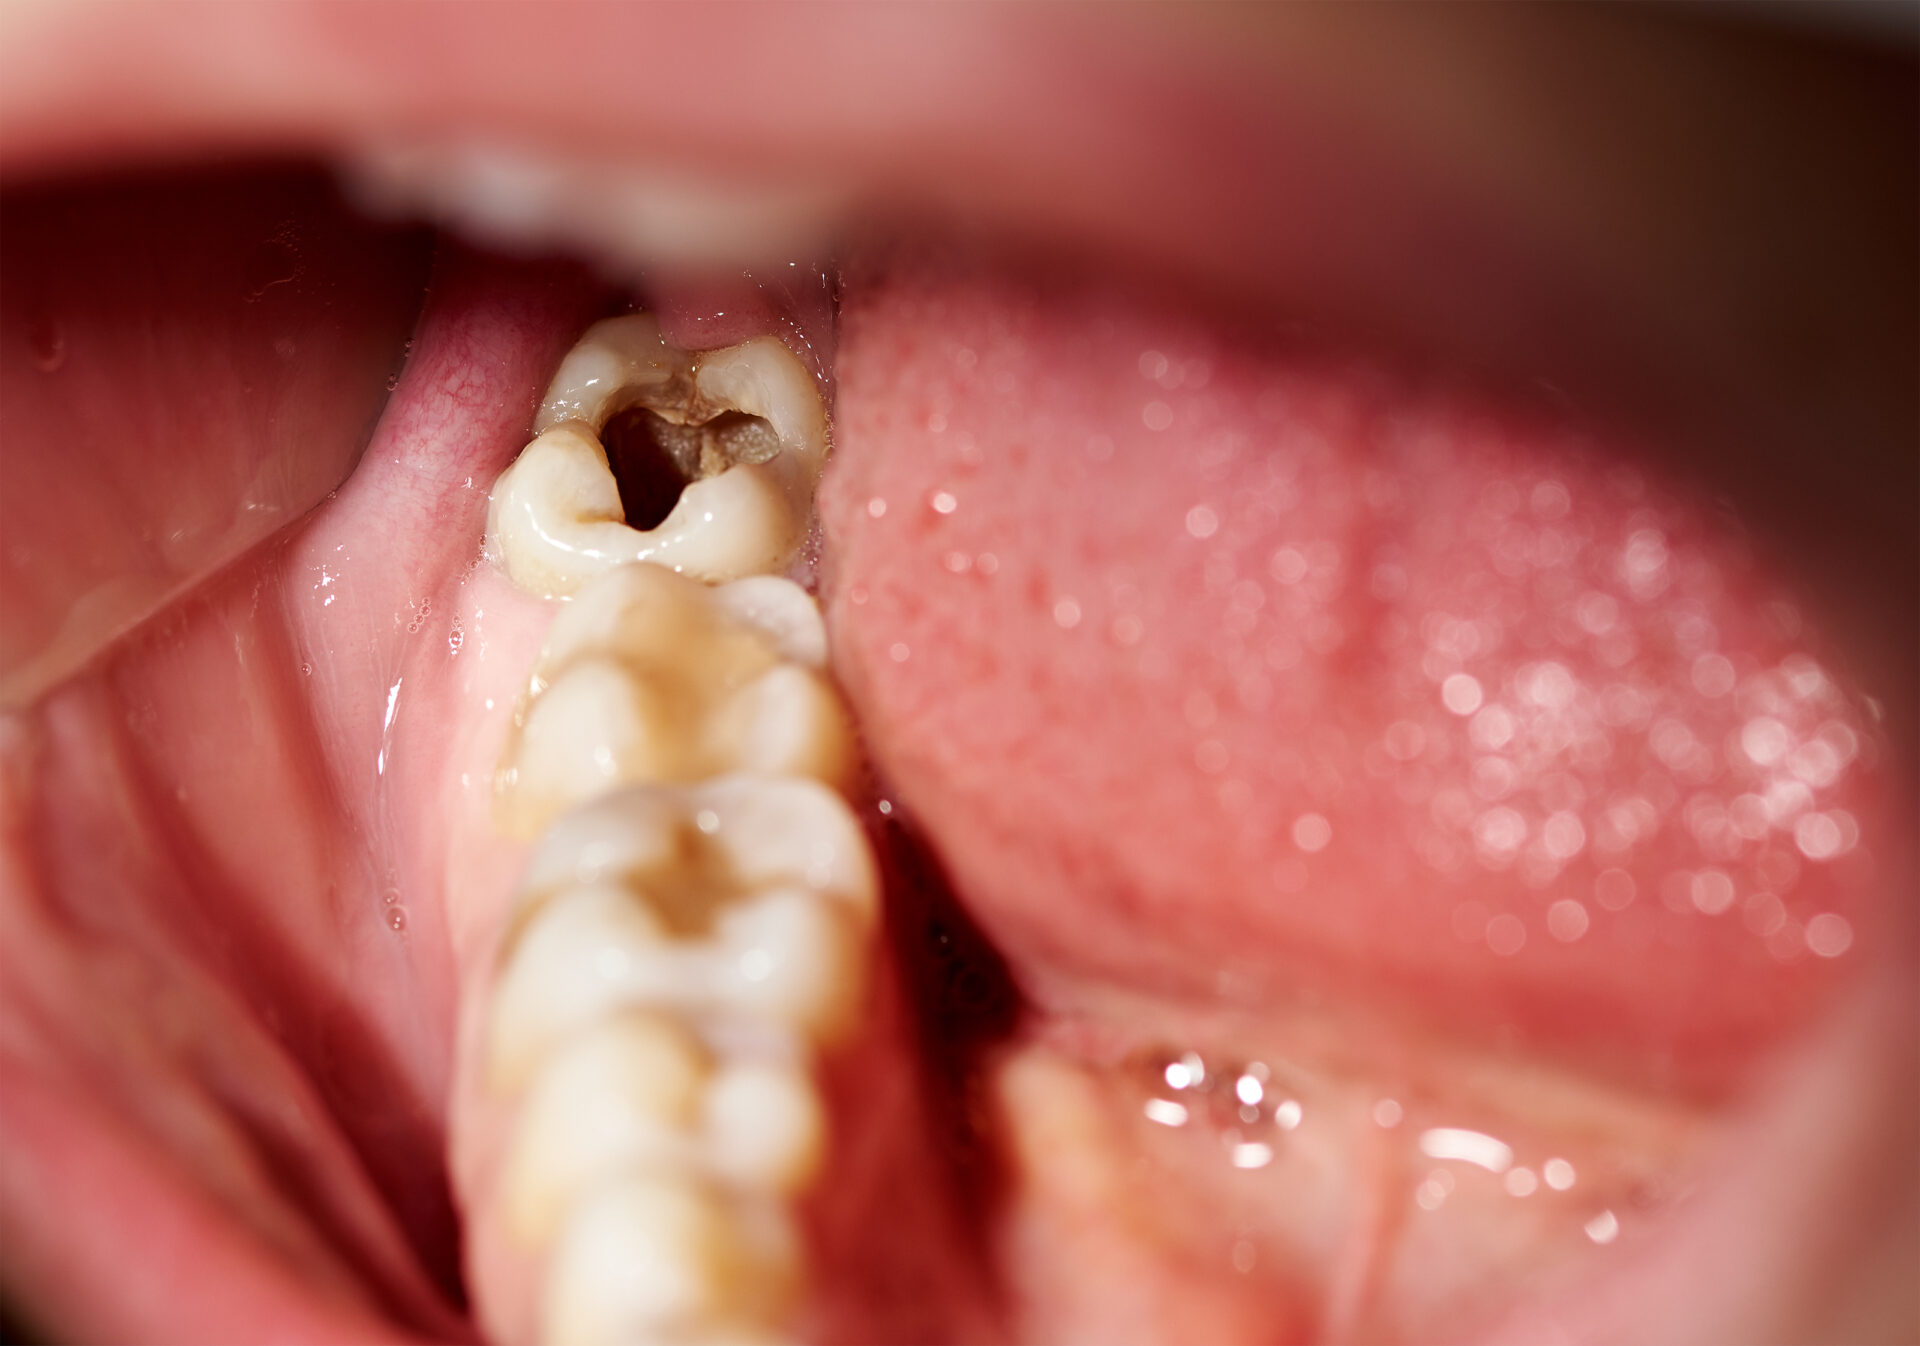 symptoms of cavities